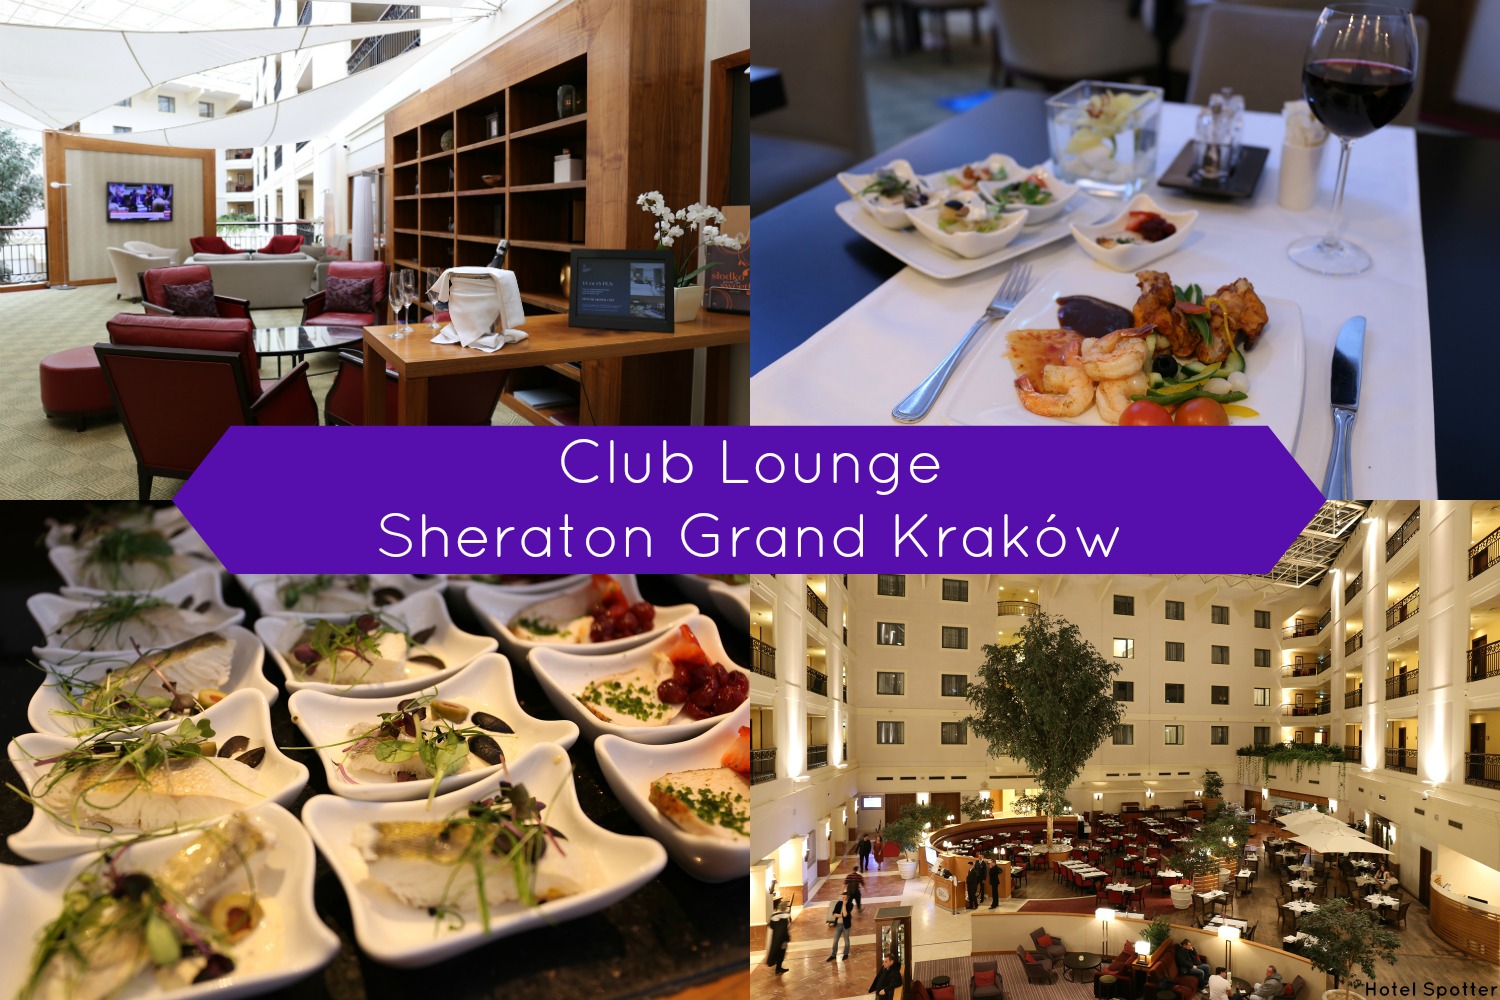 Sheraton Grand Krakow - salonik Club Lounge